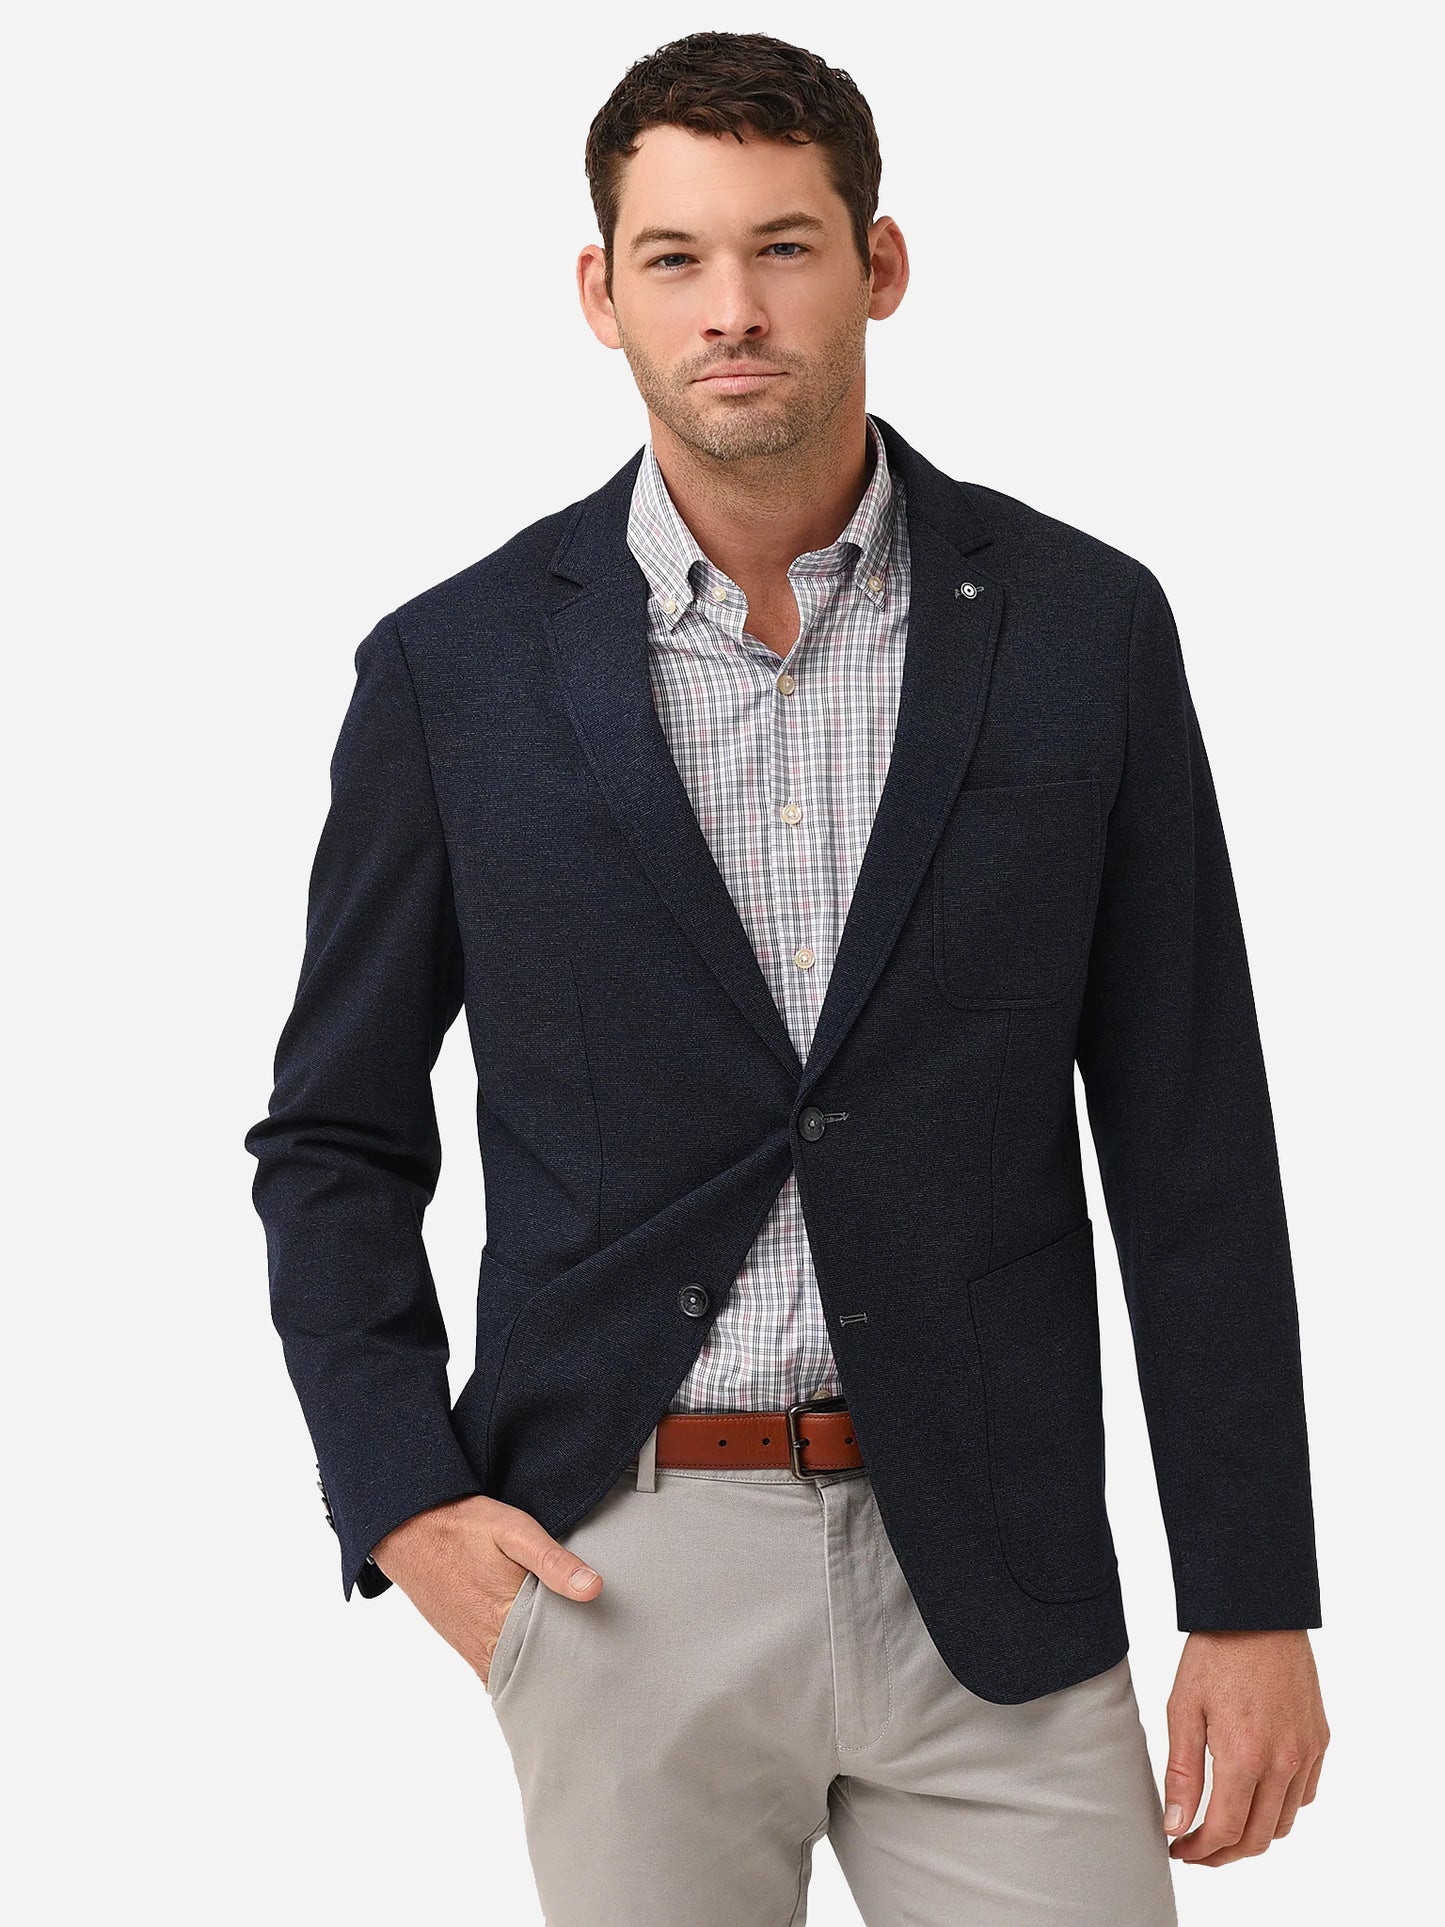 Blue Industry Men's Heathered Jersey Jacket